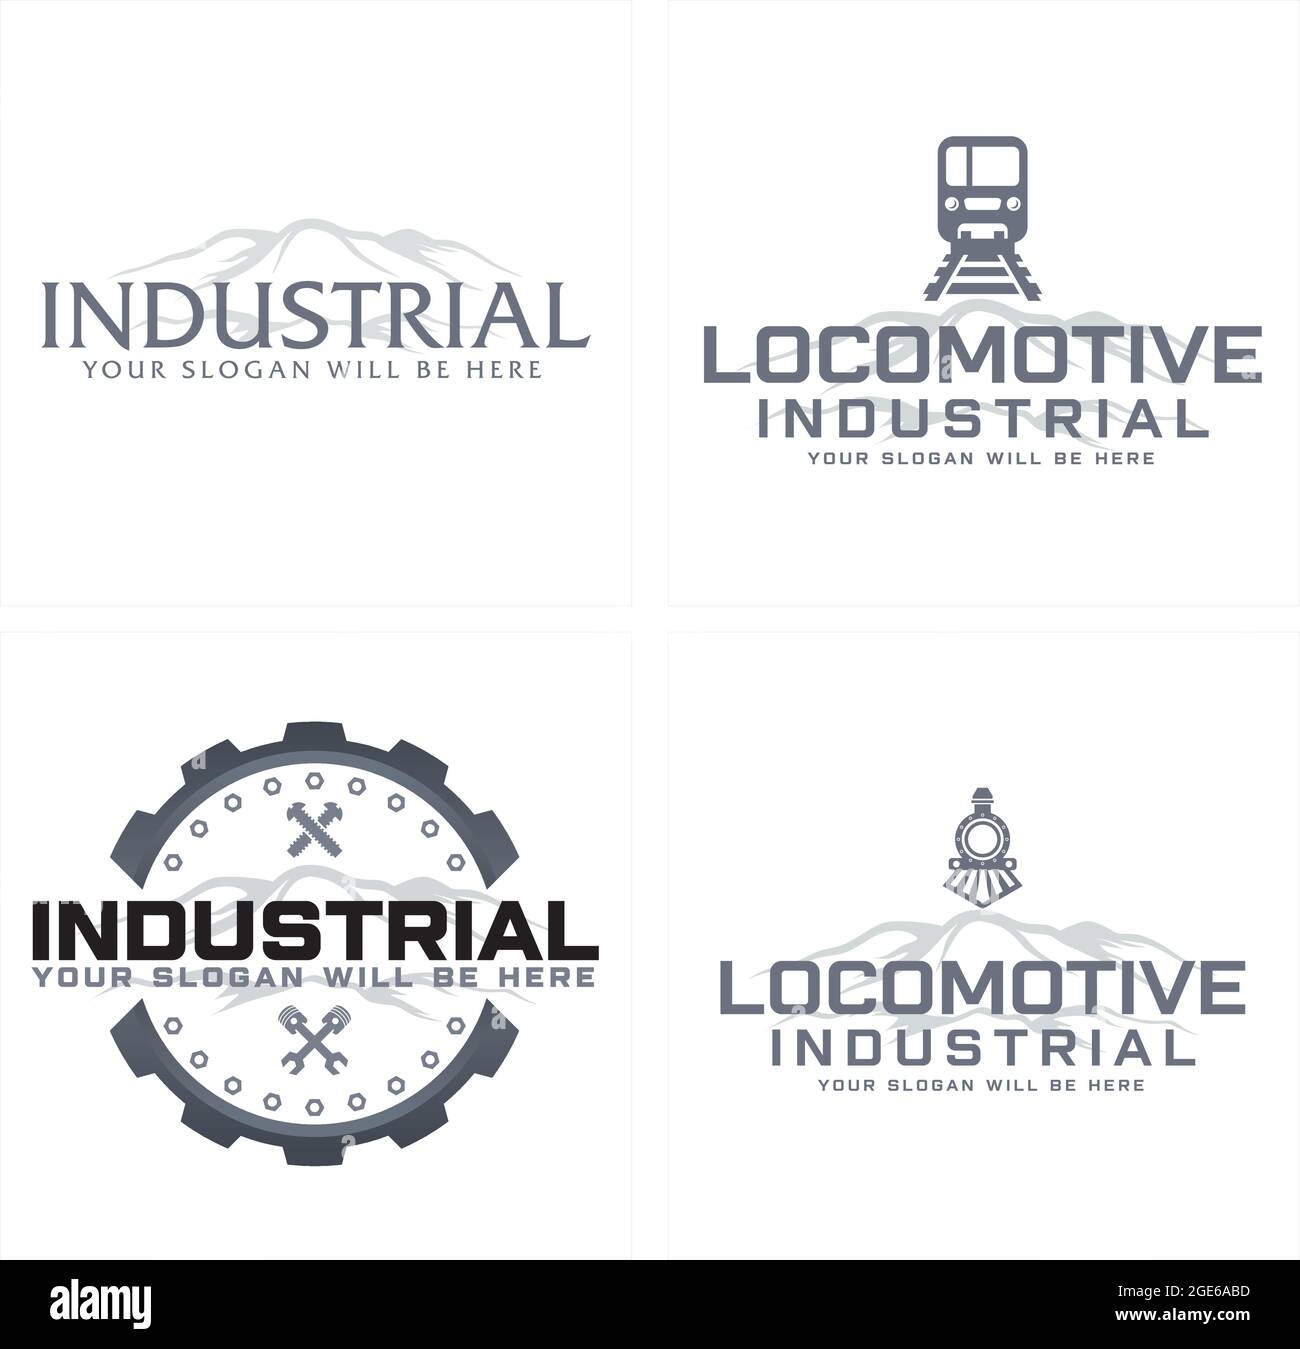 Industrial business locomotives service logo Stock Vector